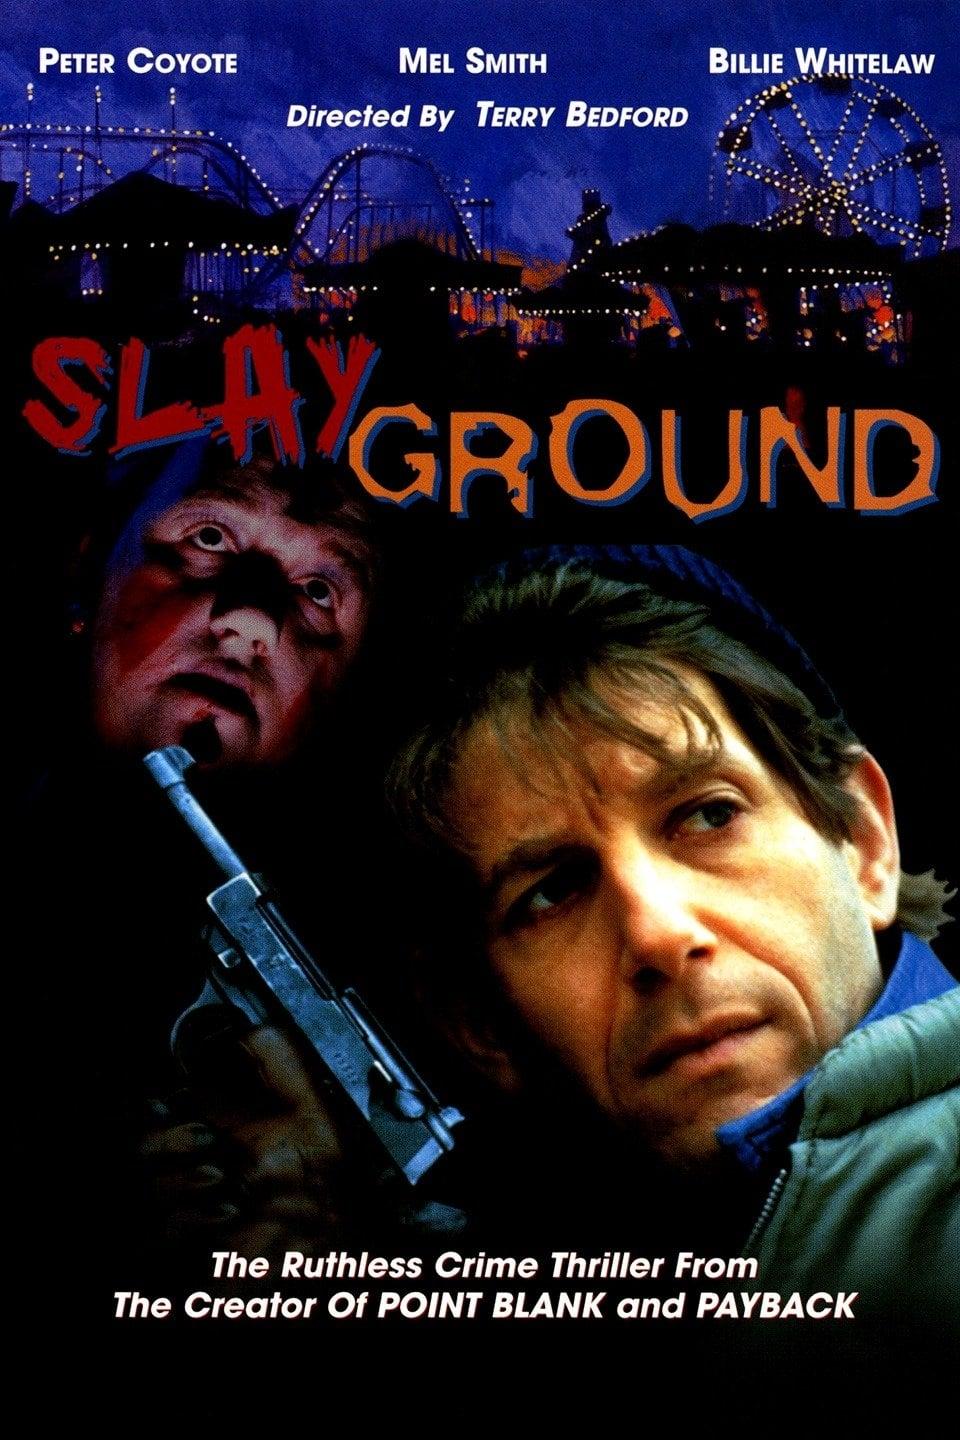 Slayground poster